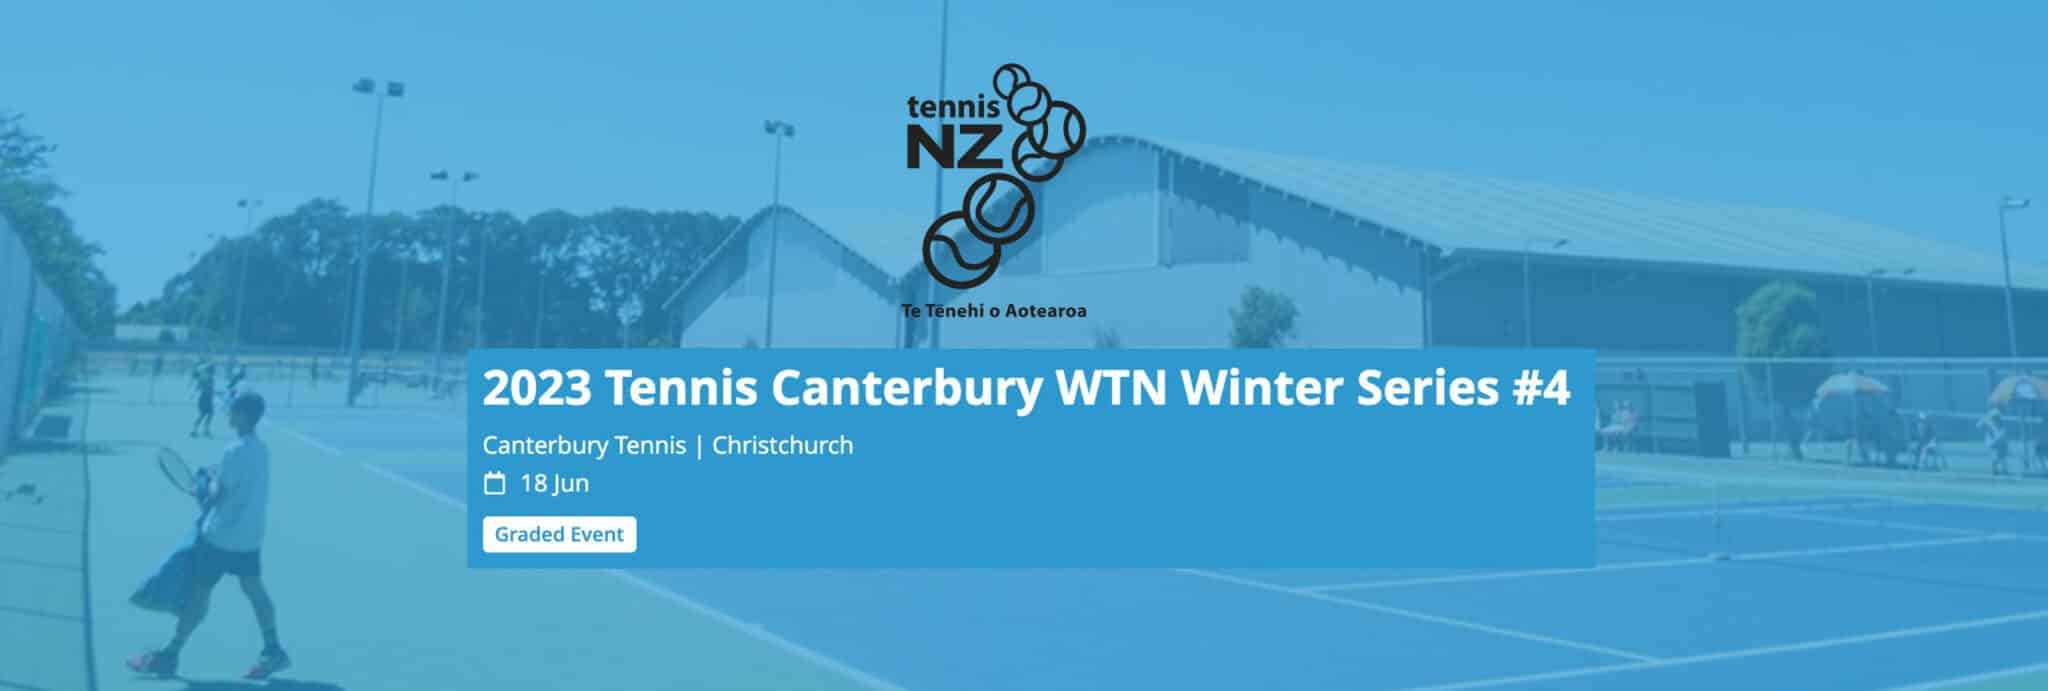 2023 Tennis Canterbury WTN Winter Series #4